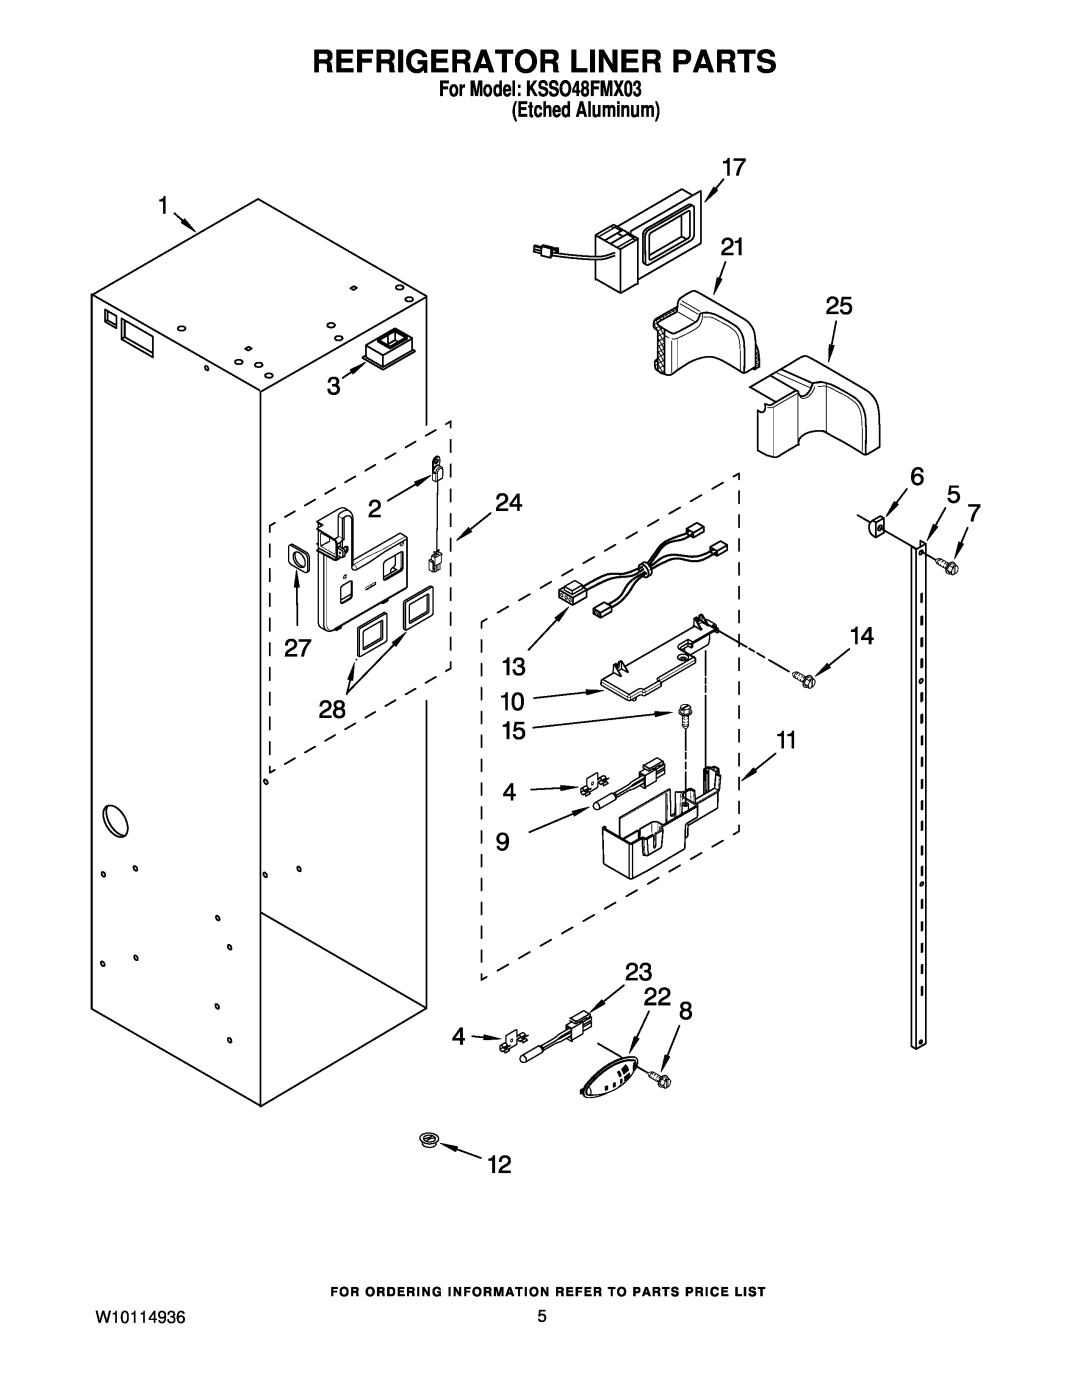 KitchenAid manual Refrigerator Liner Parts, W10114936, For Model KSSO48FMX03 Etched Aluminum 